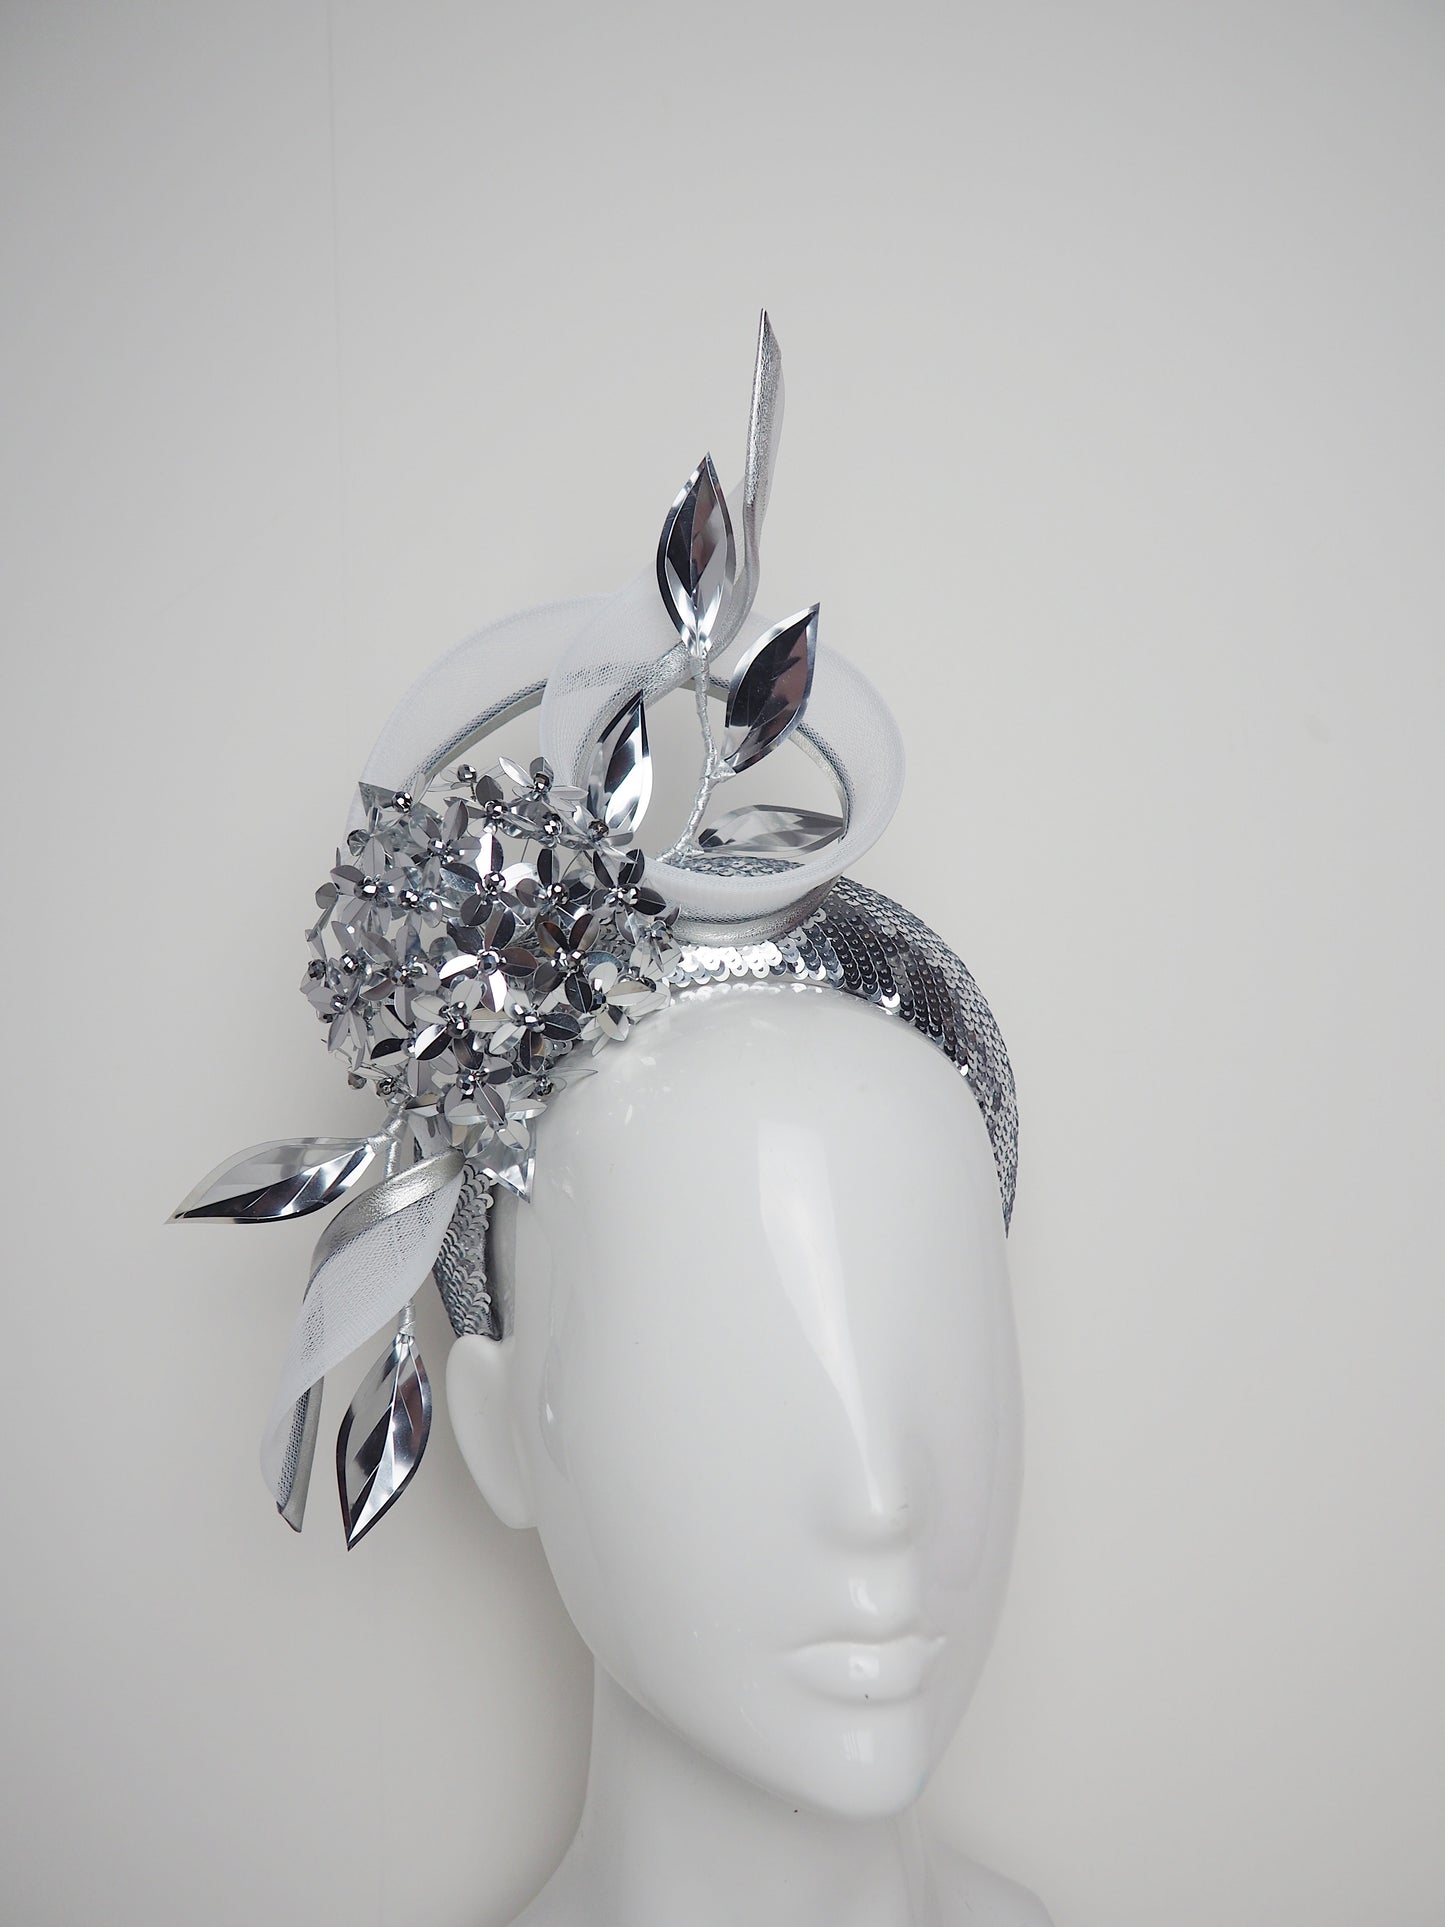 Disco Swirl -silver sequined 3d Headband with a Green Allium flower and crinoline swirl